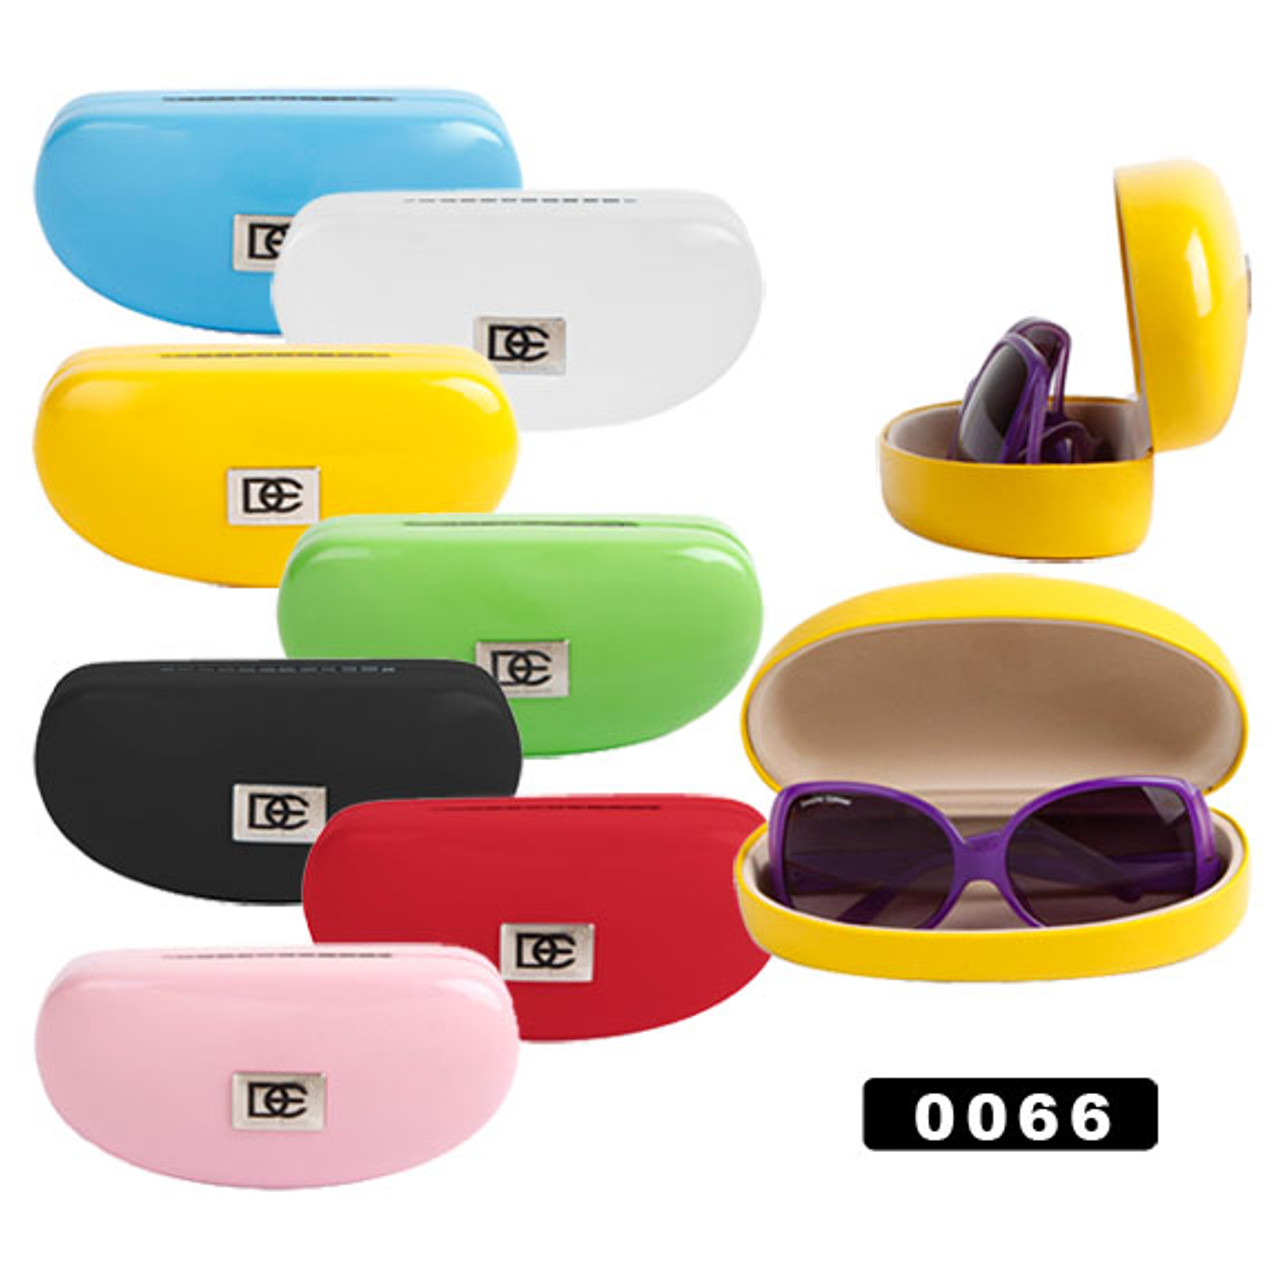 Sunglass Hard Cases by DE™0066 (1 Doz.) Assorted Colors